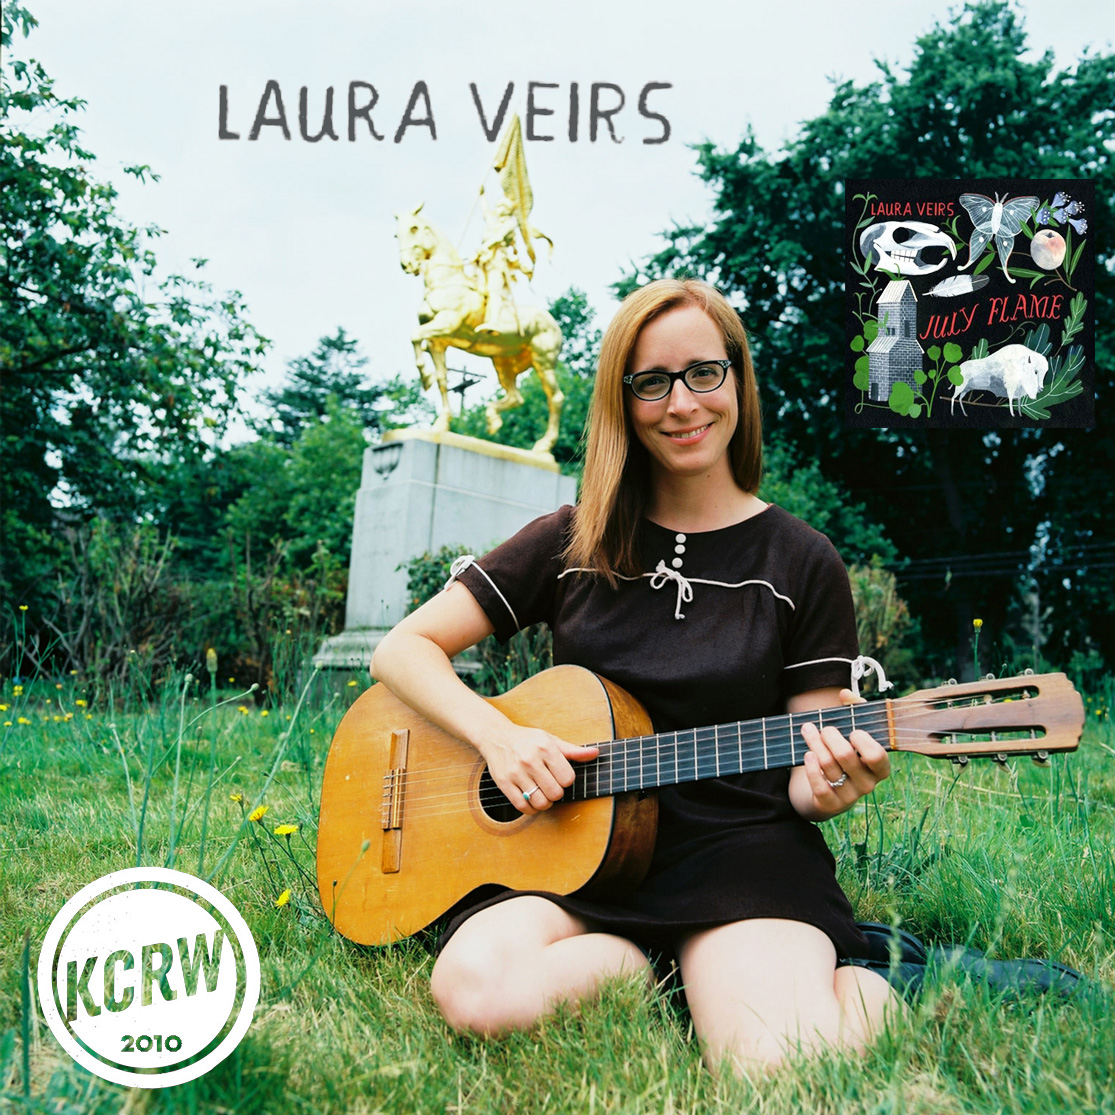 Laura veirs discography torrent - nimfaplace